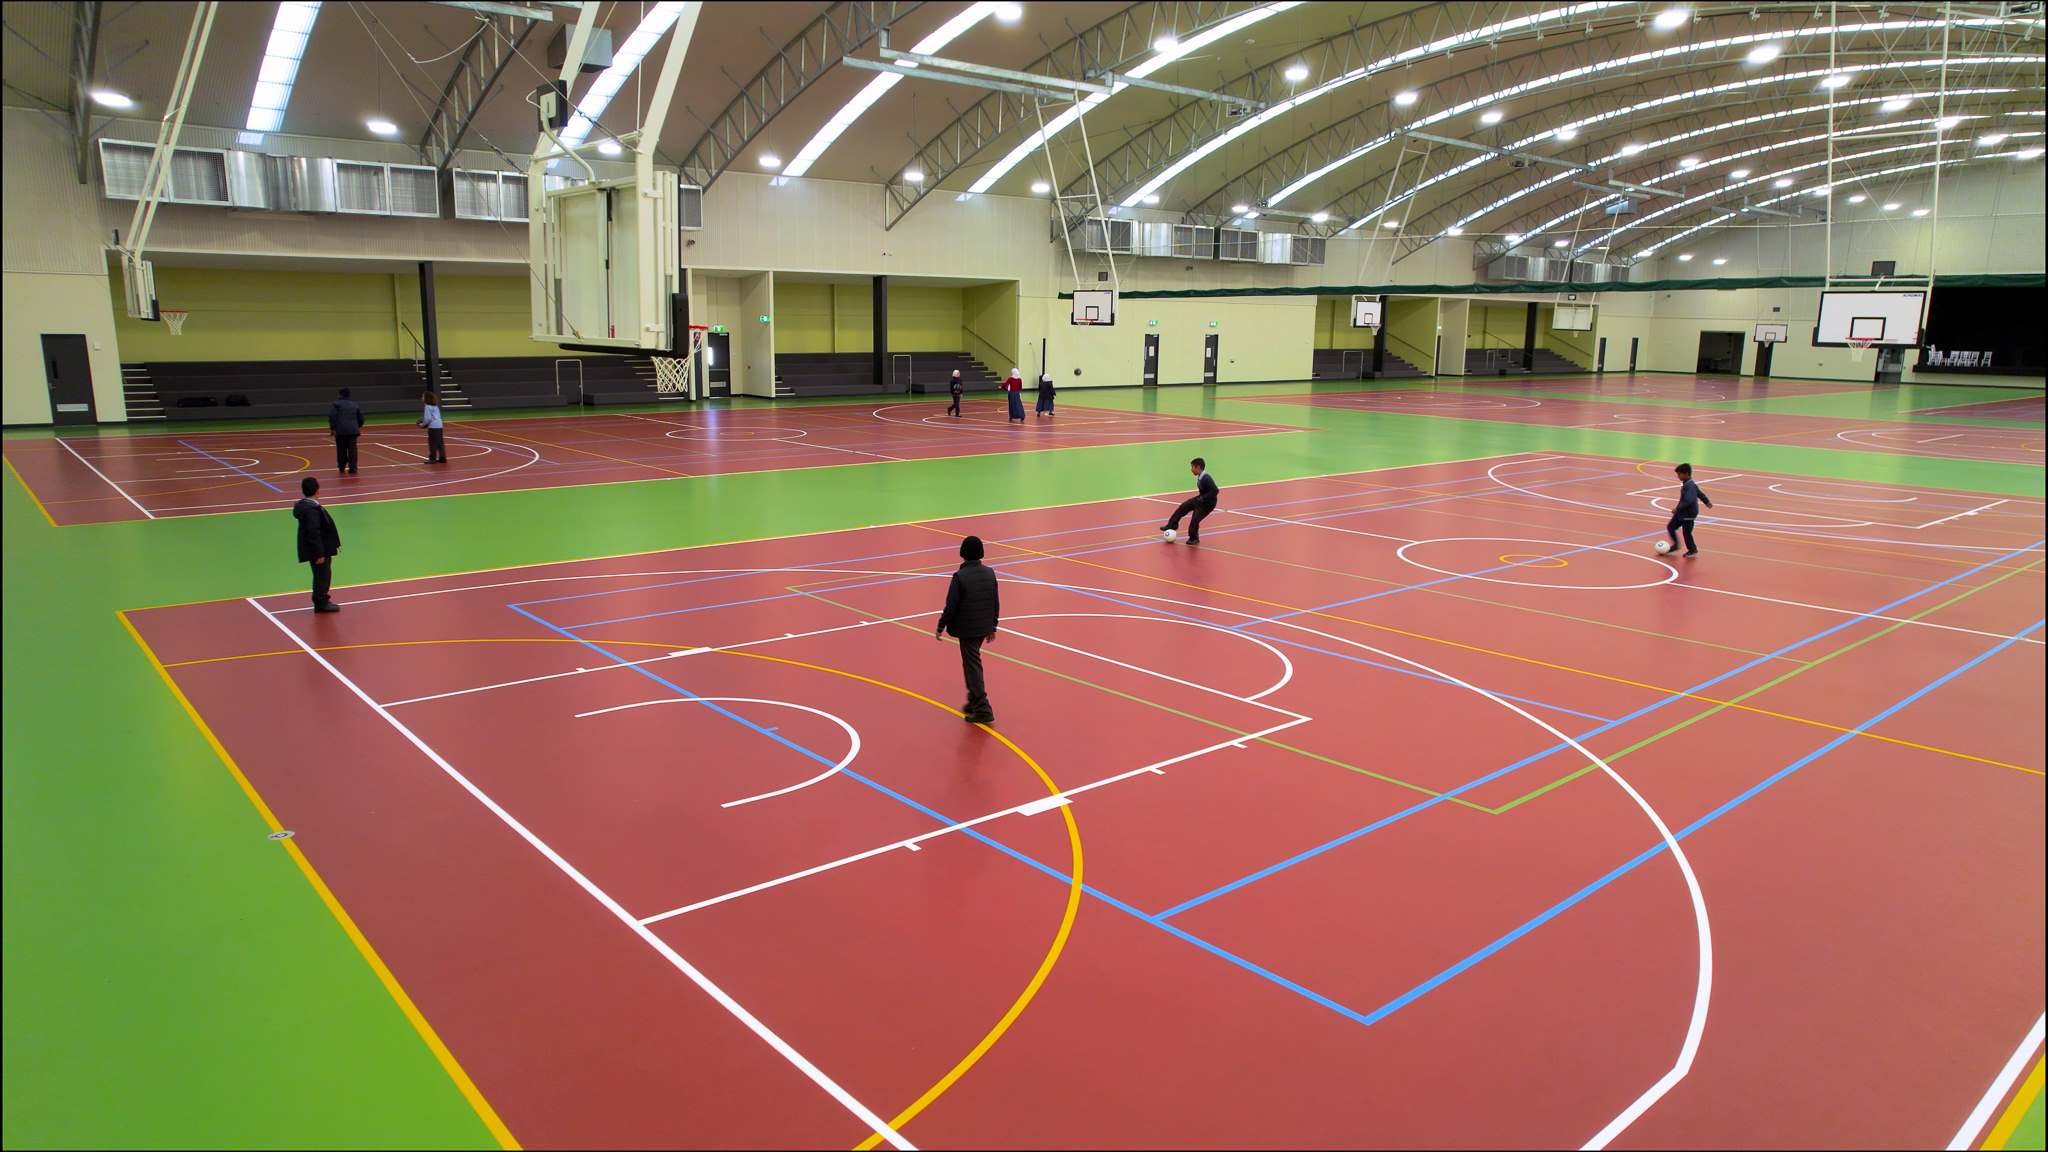 Al-Taqwa College Gymnasium Sports Arena Basketball Court Cover